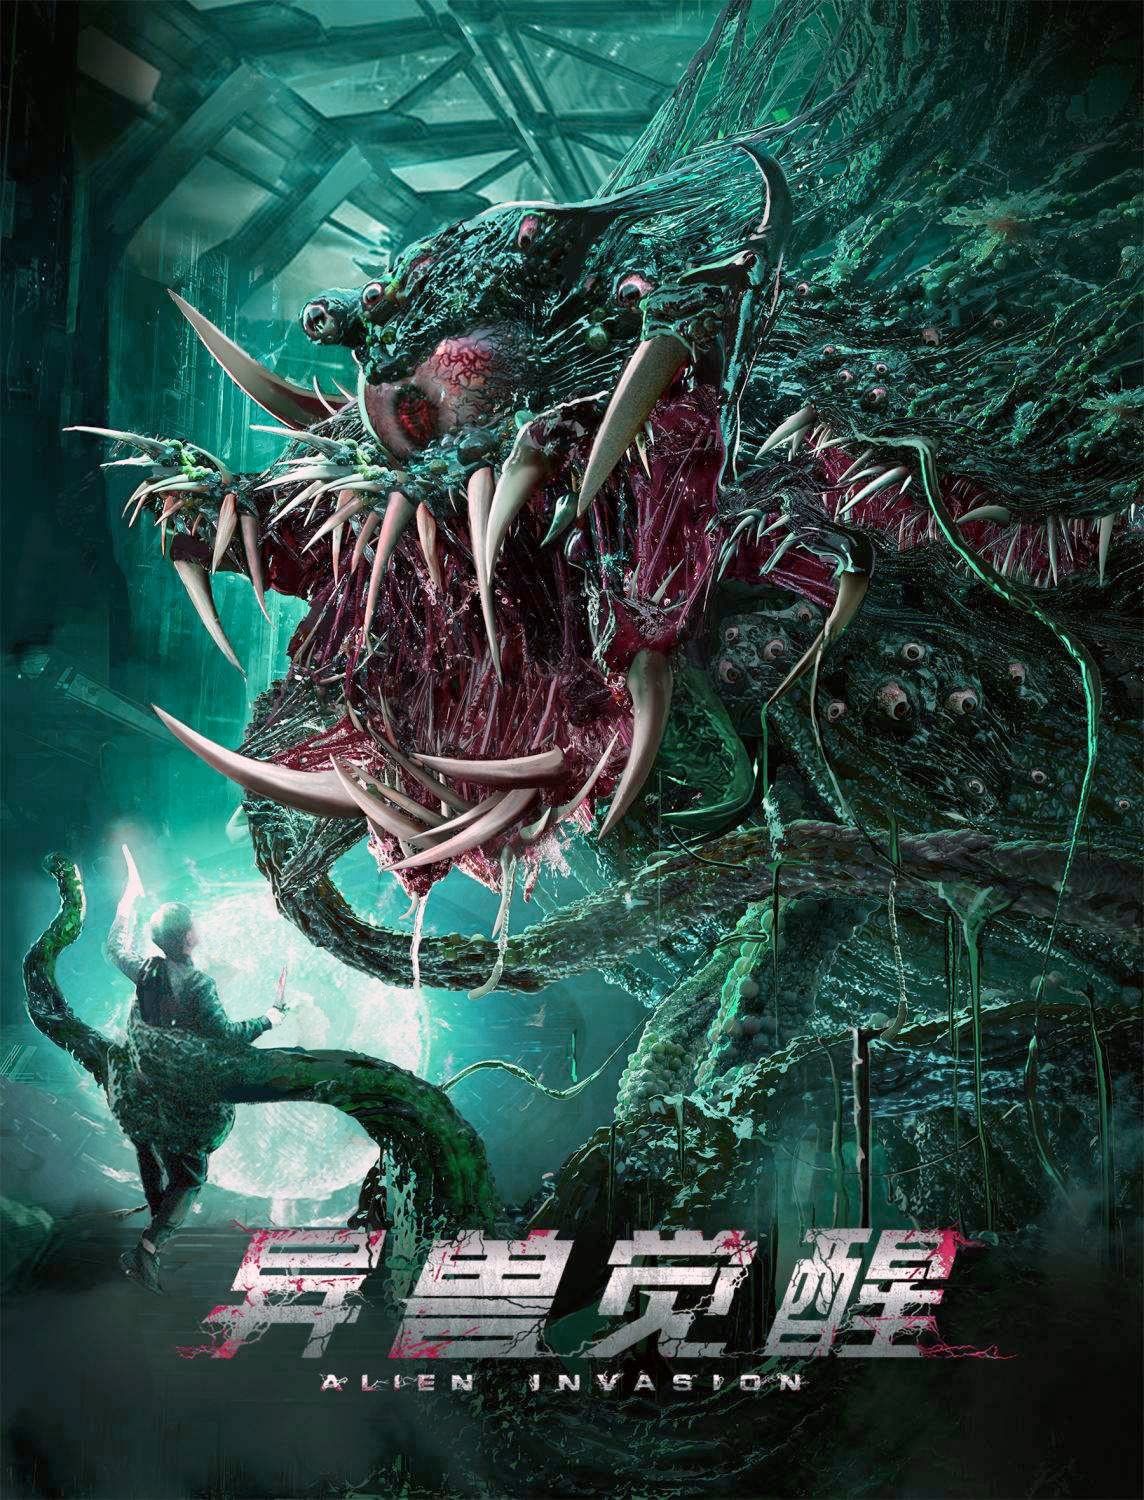 Alien Invasion (2020) Hindi Dubbed HDRip download full movie